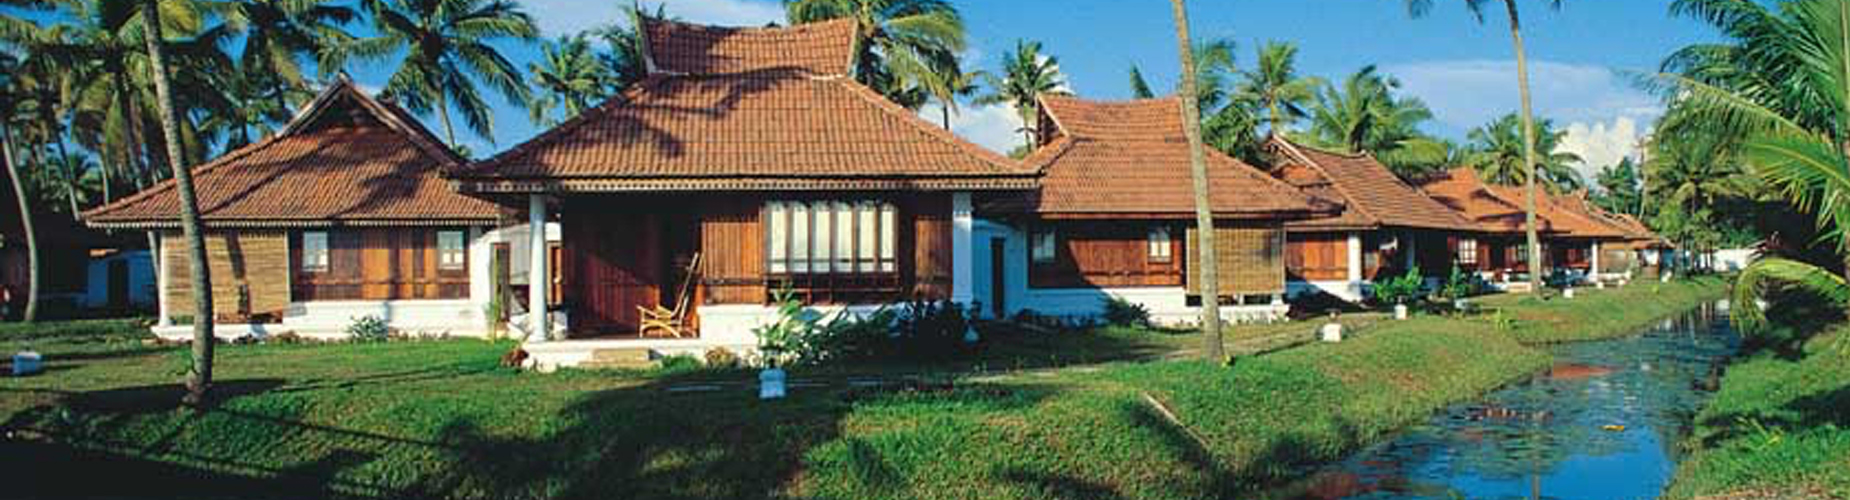 Kerala Heritage Villas & Resorts